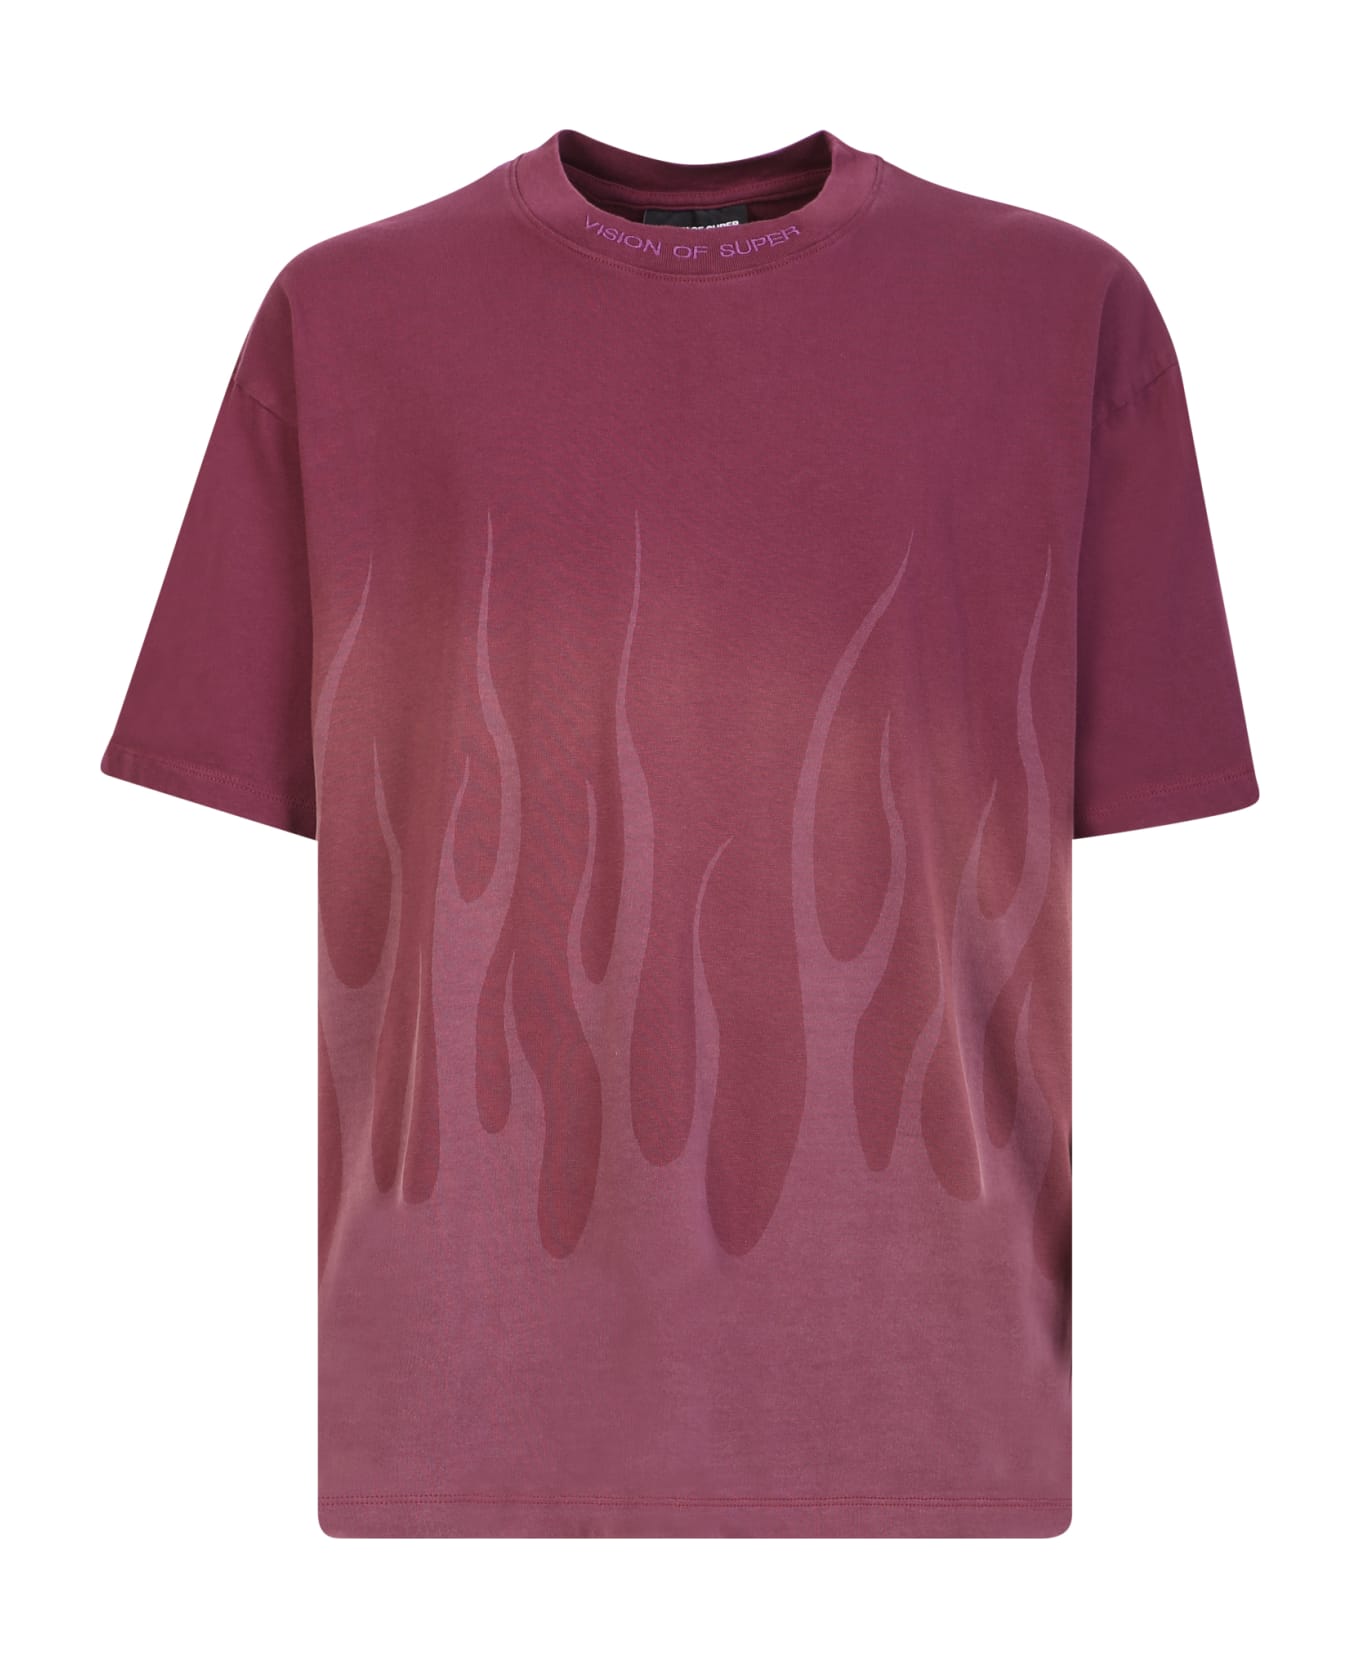 Vision of Super Wine Lasered Flames T-shirt - Bordeaux